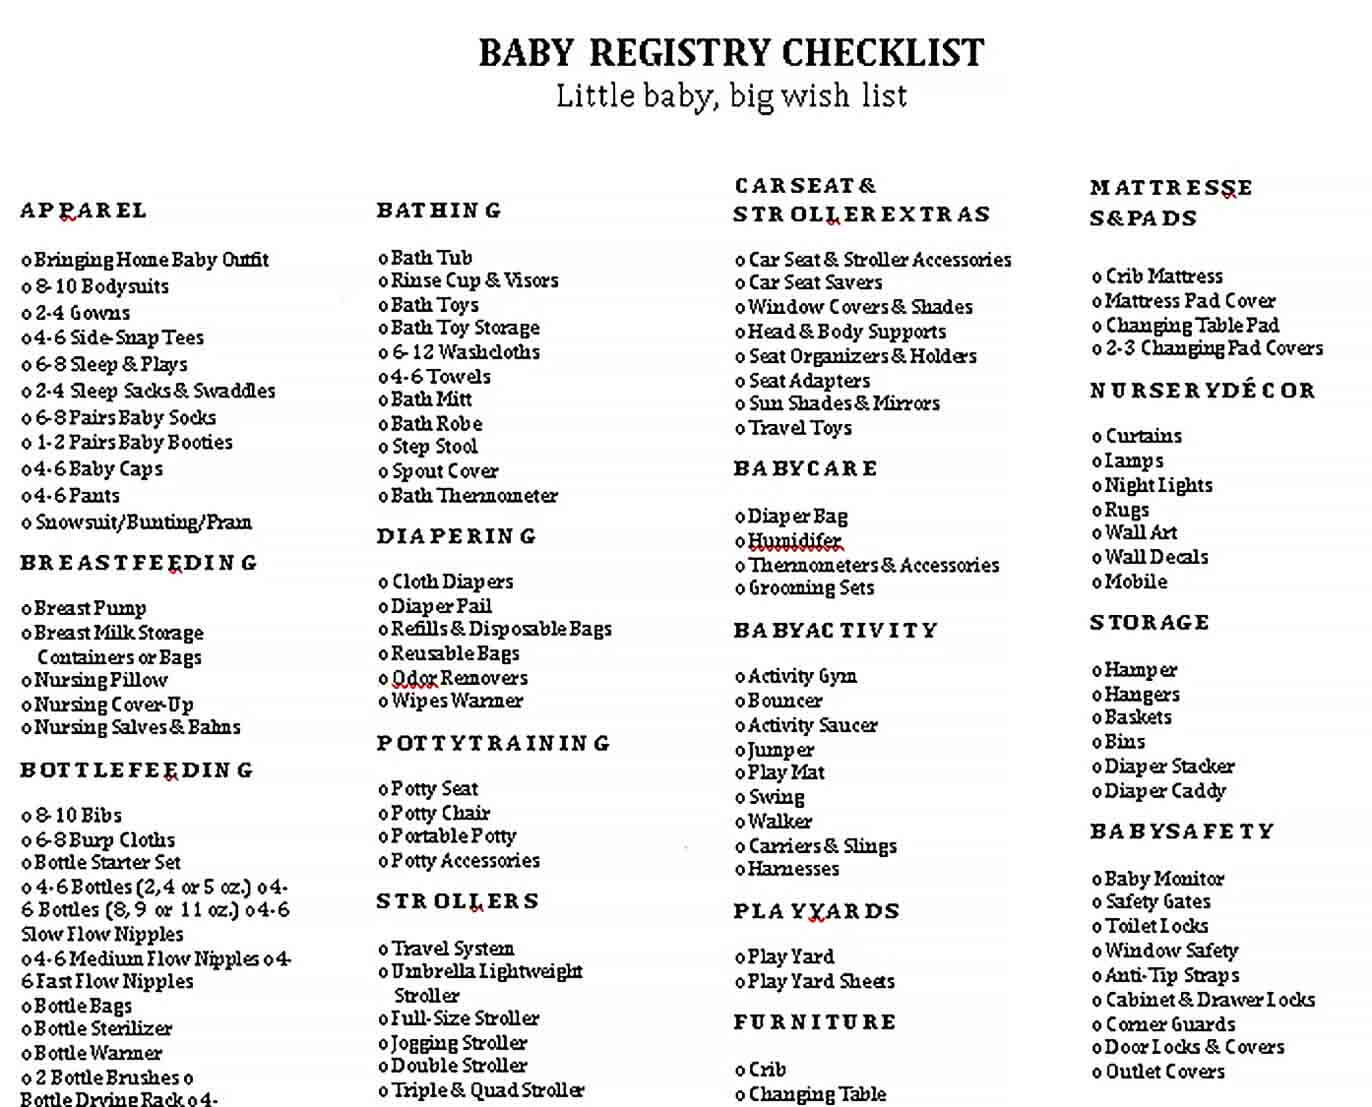 Sample kohls Complete Little Baby Registry Checklist